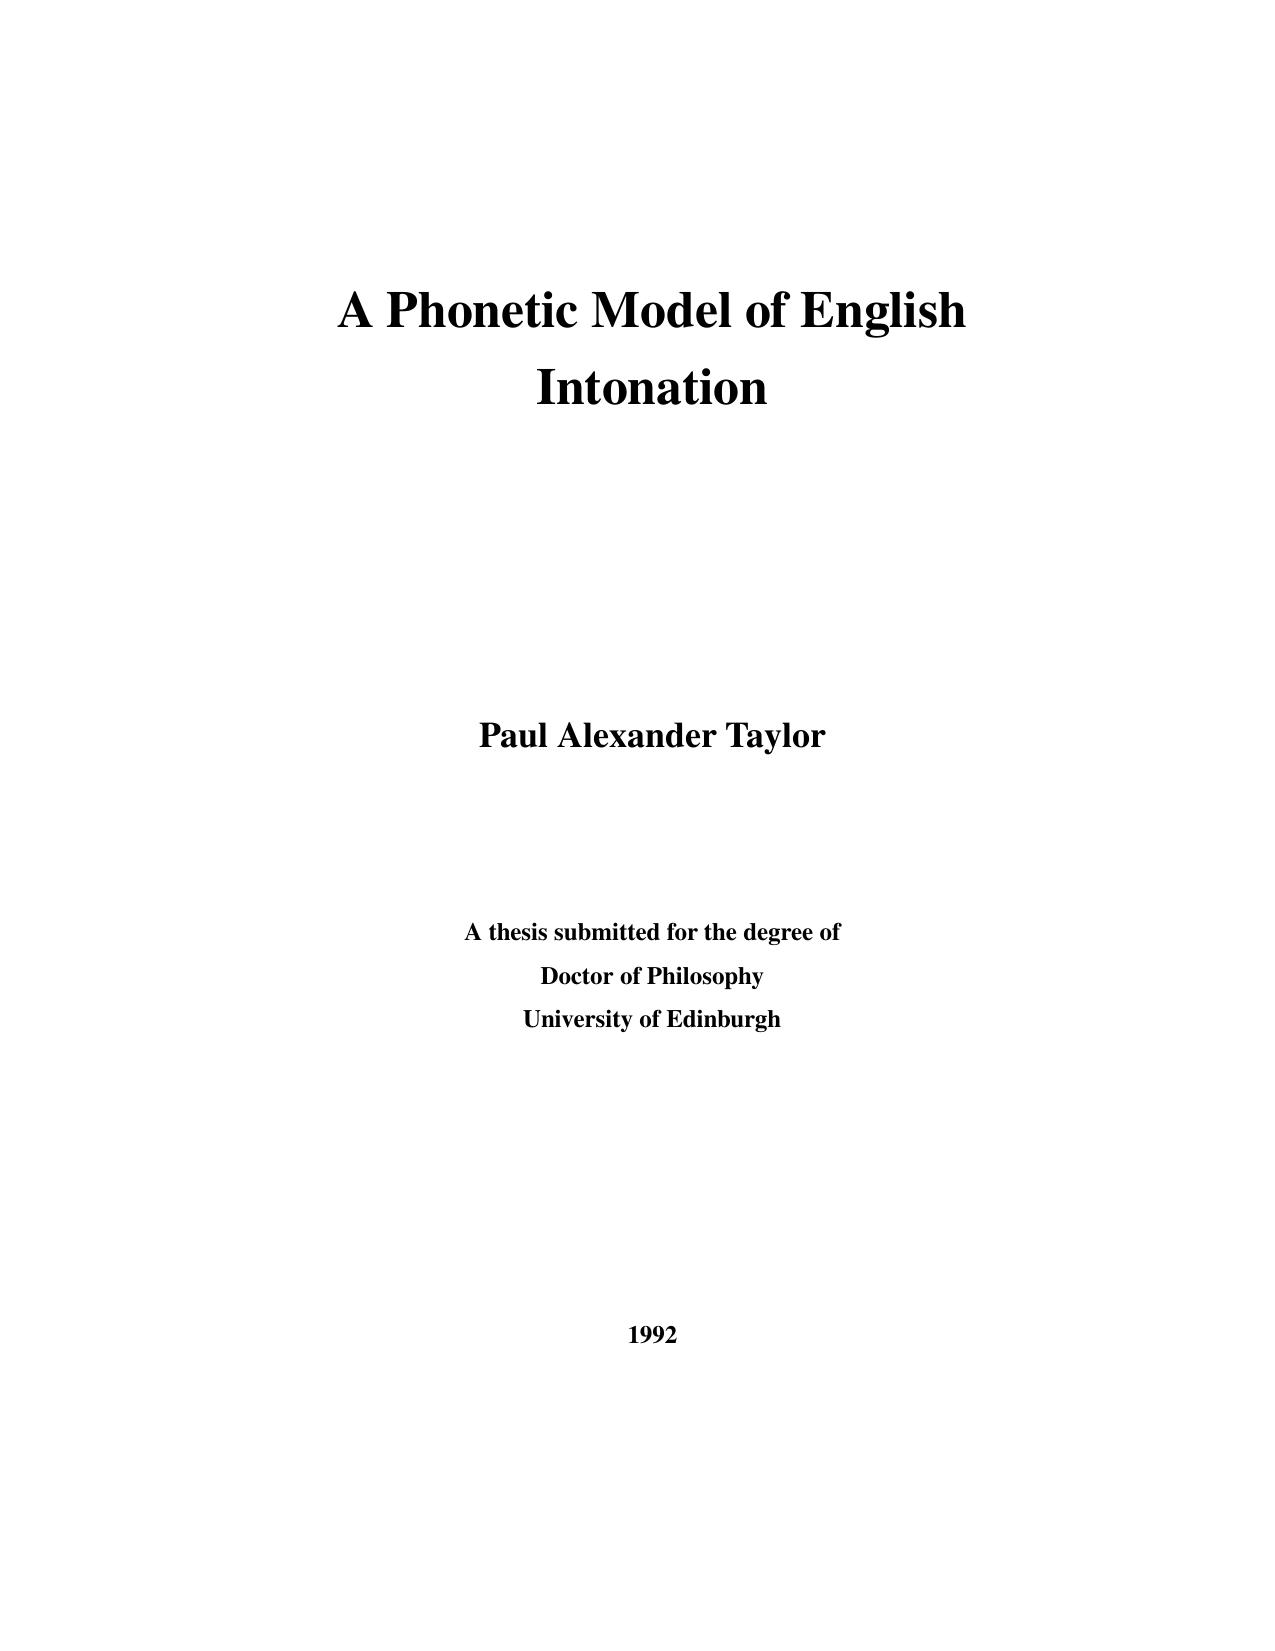 A Phonetic Model of English Intonation 2016